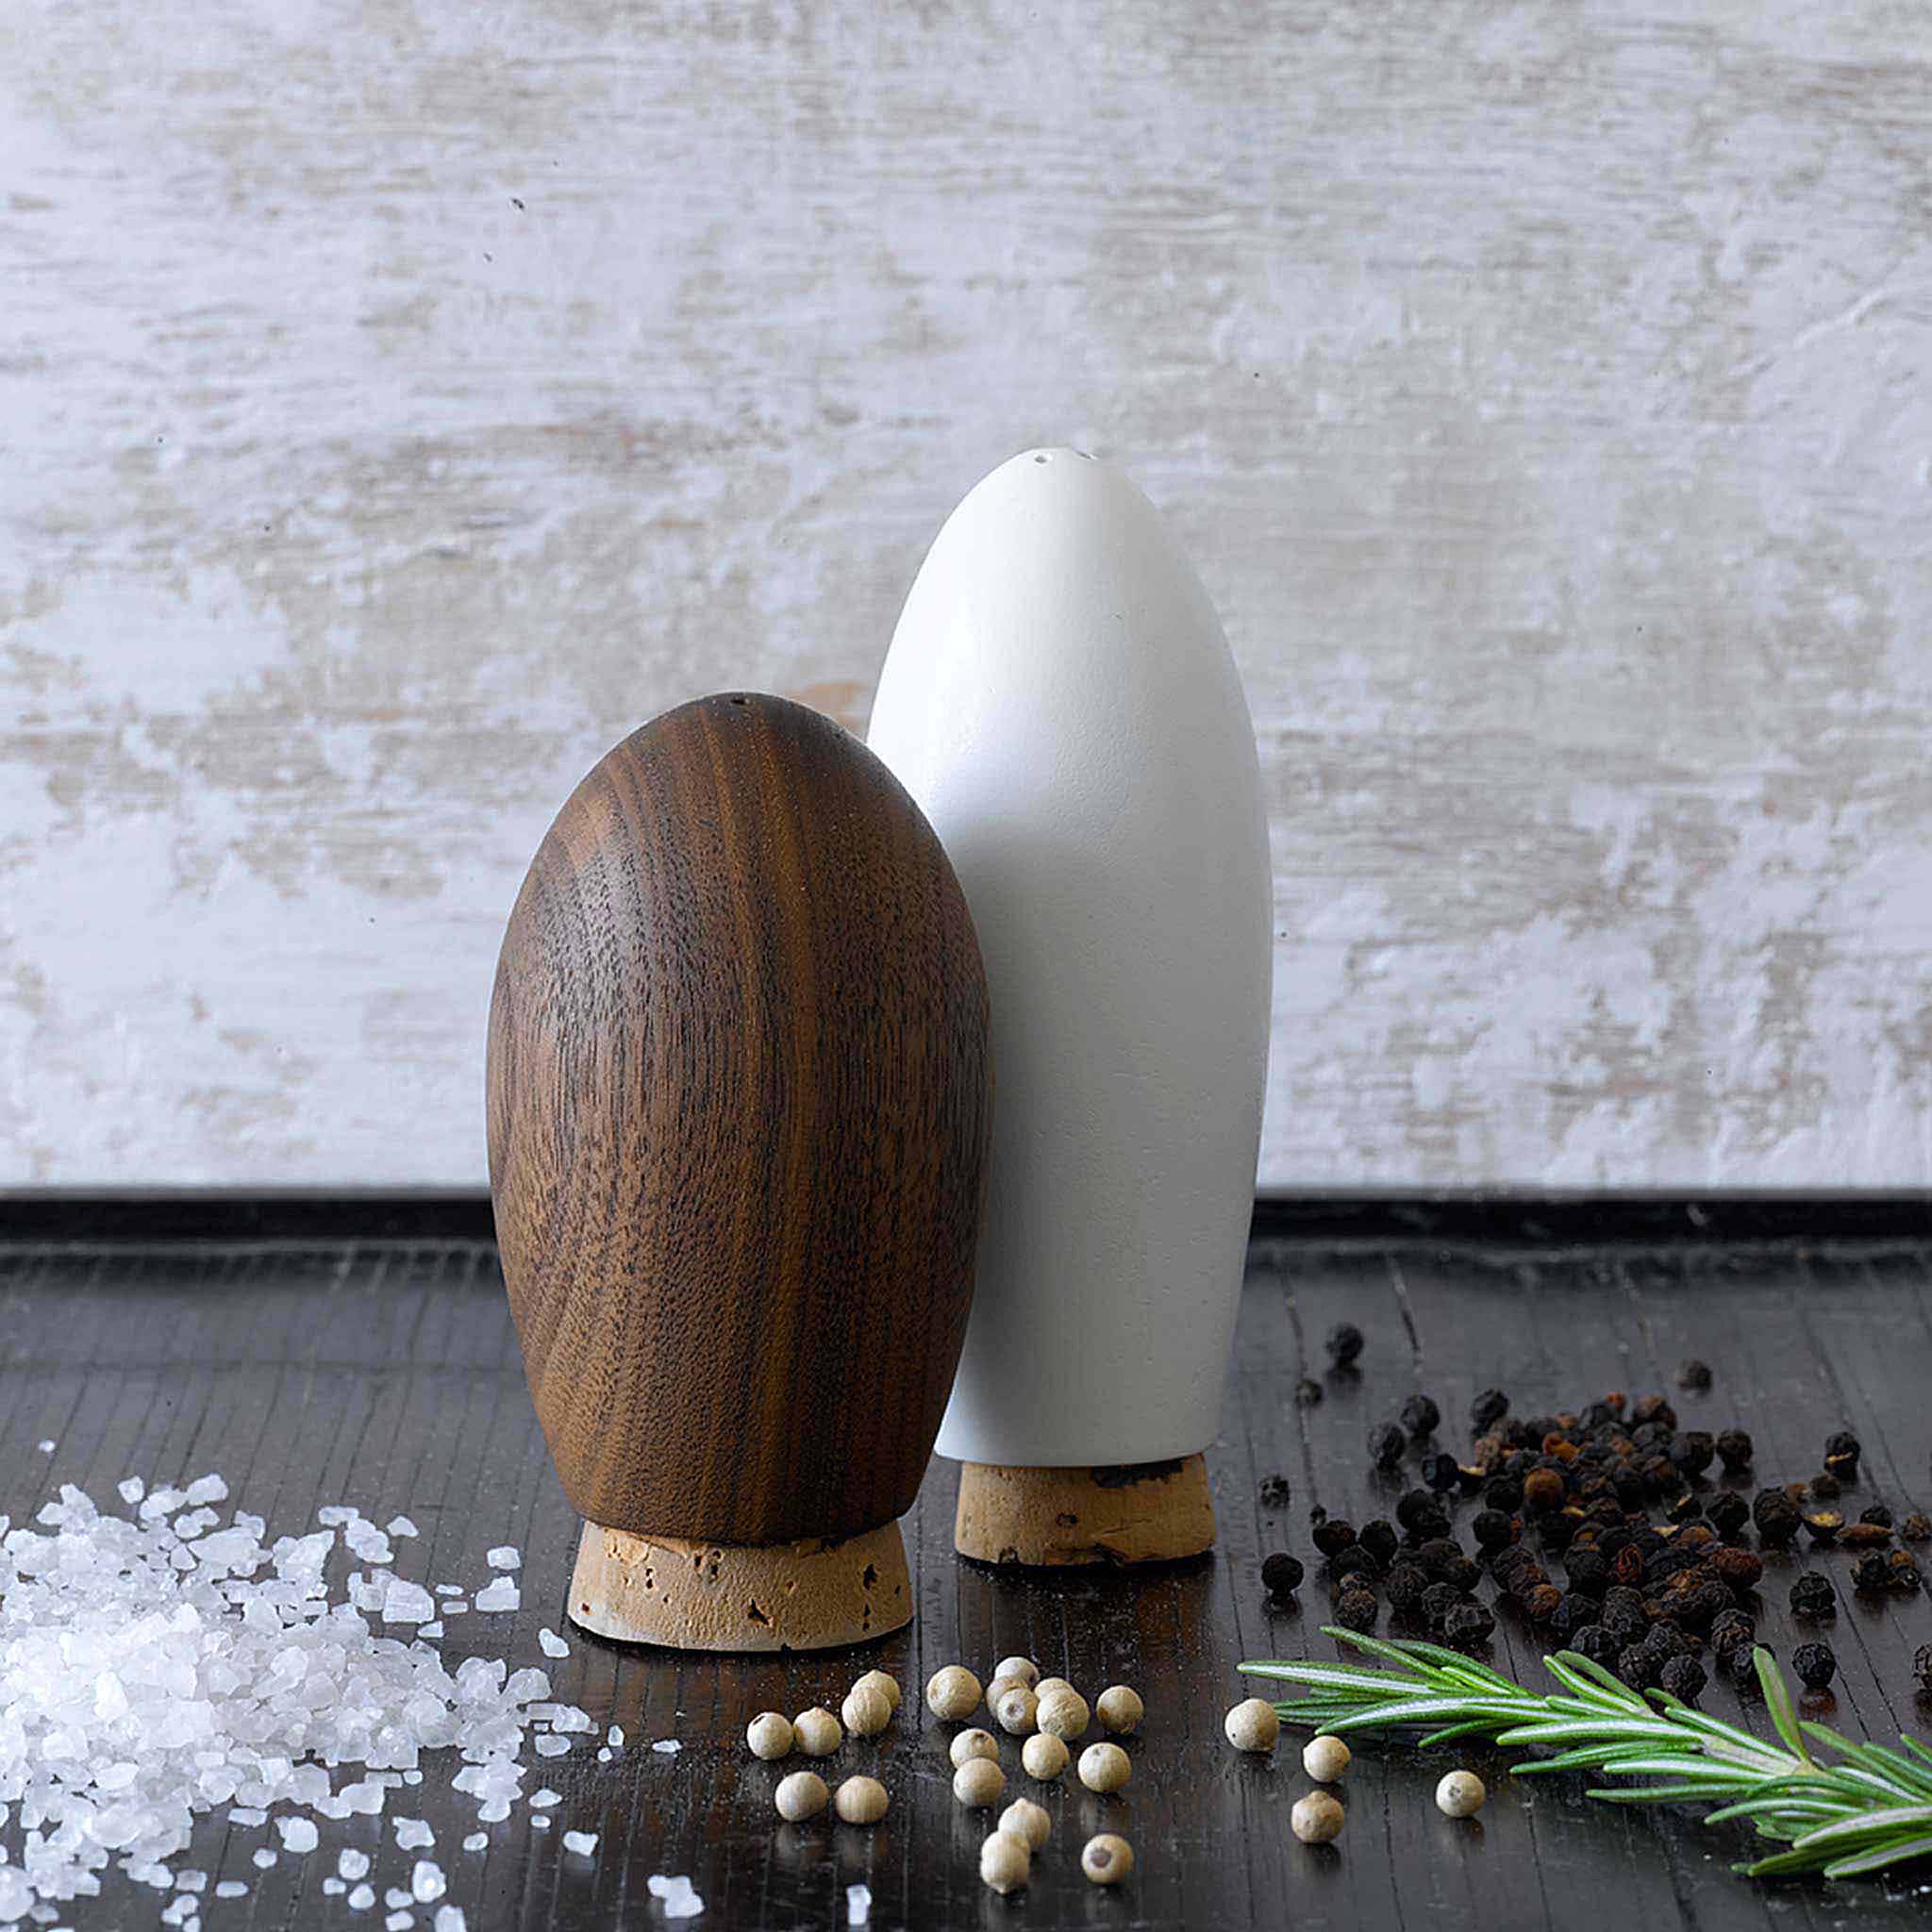 Salt and Pepper Shaker set by Diane Ruengsorn for Domestic Aesthetic.